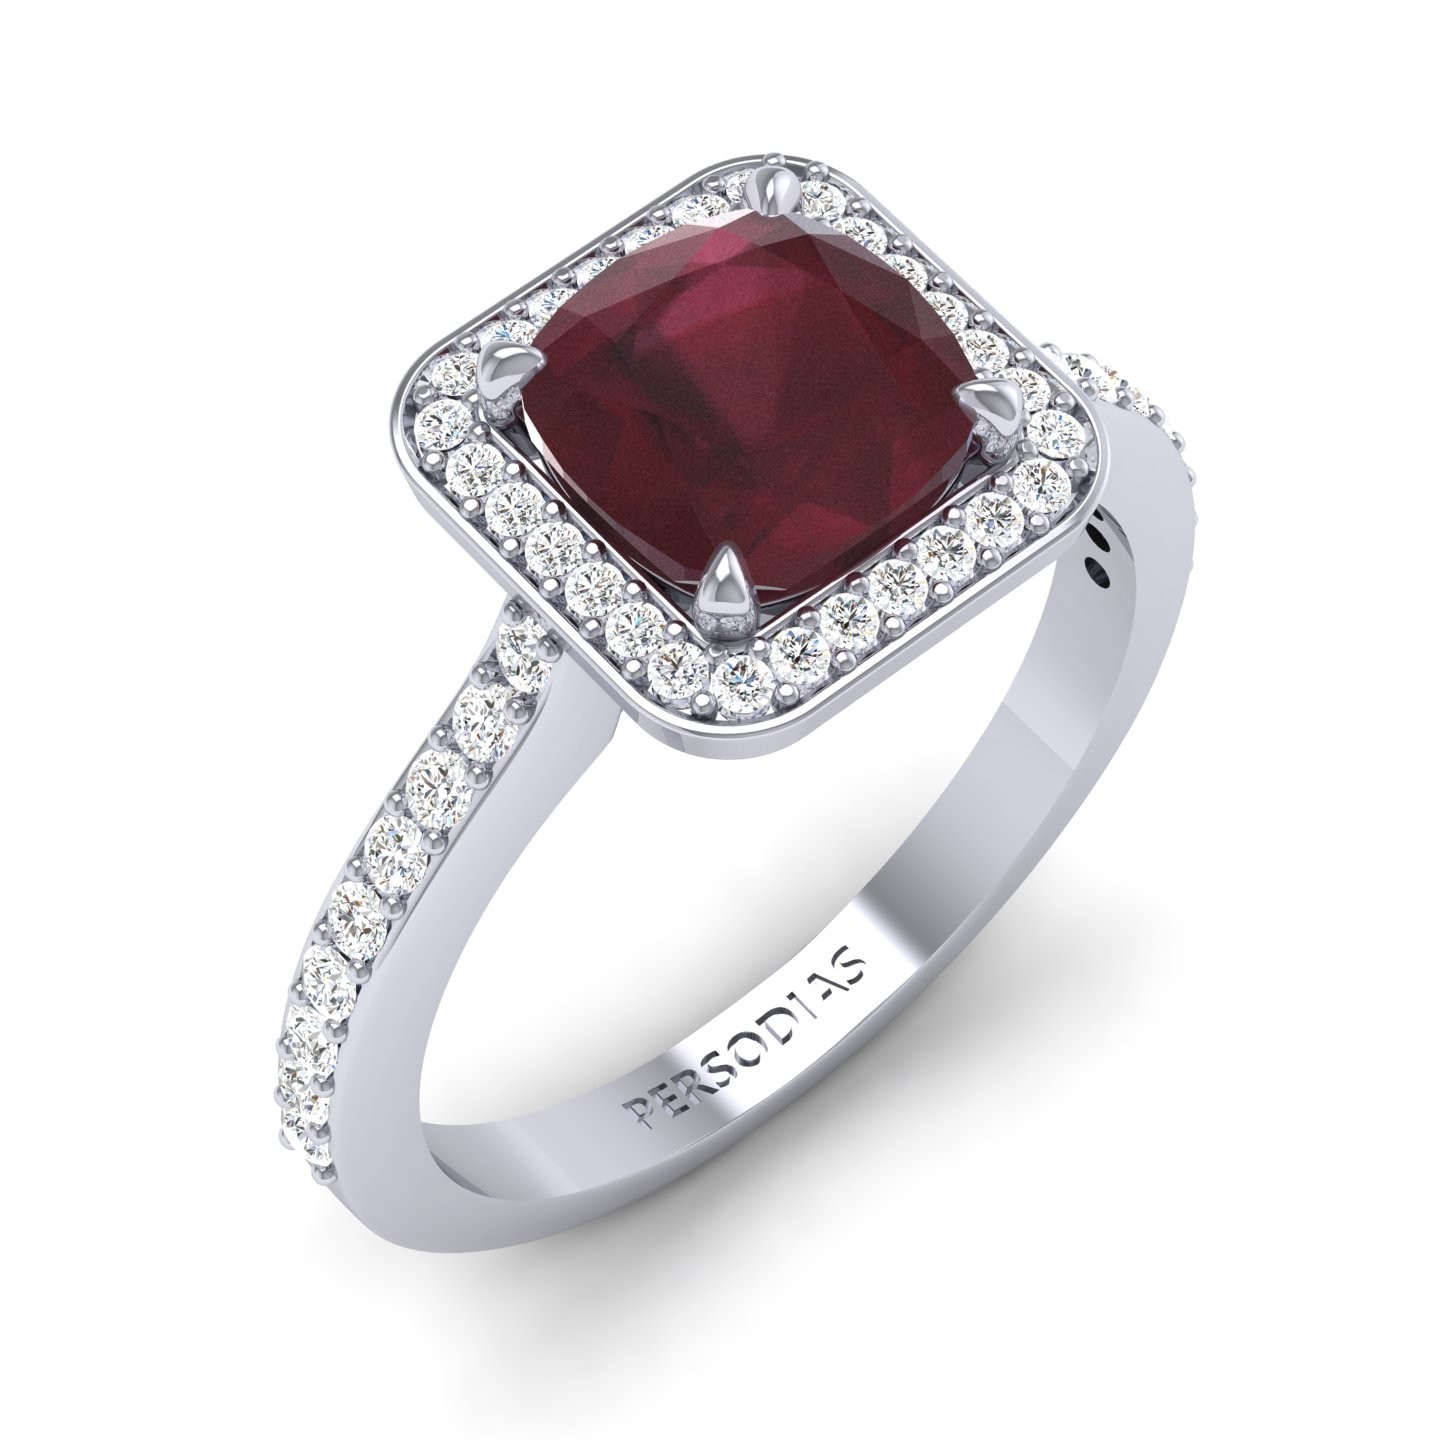 Halo Engagement Ring Semi Precious Stone 2.30 Ct Kaylee